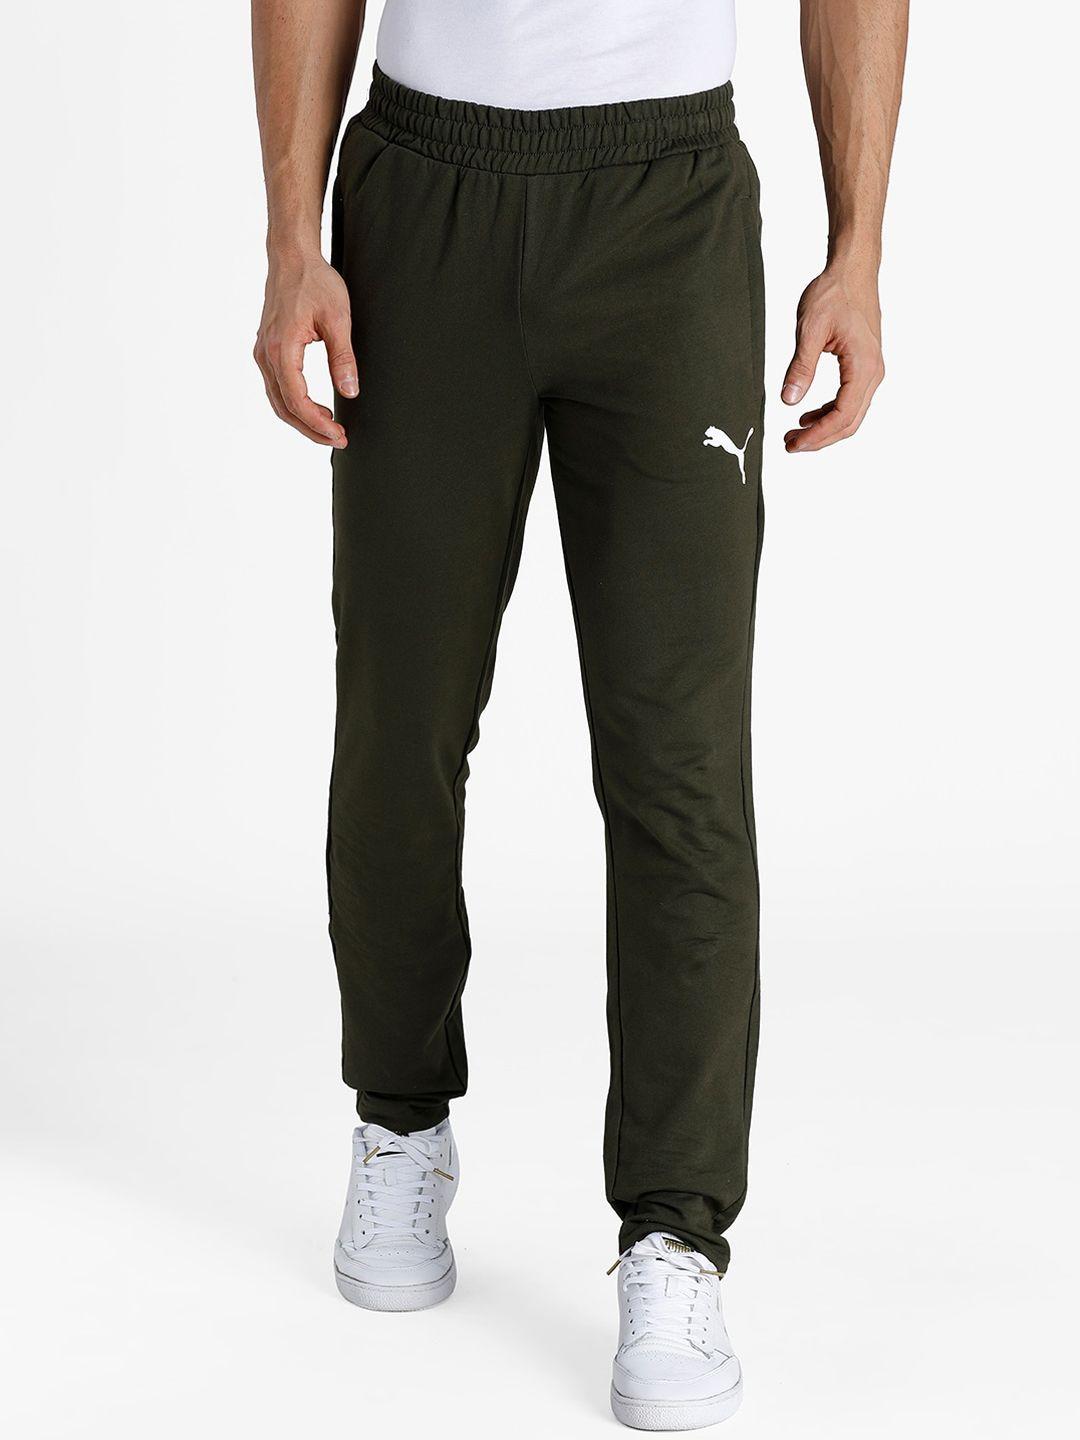 puma-men-olive-green-brand-logo-printed-track-pants